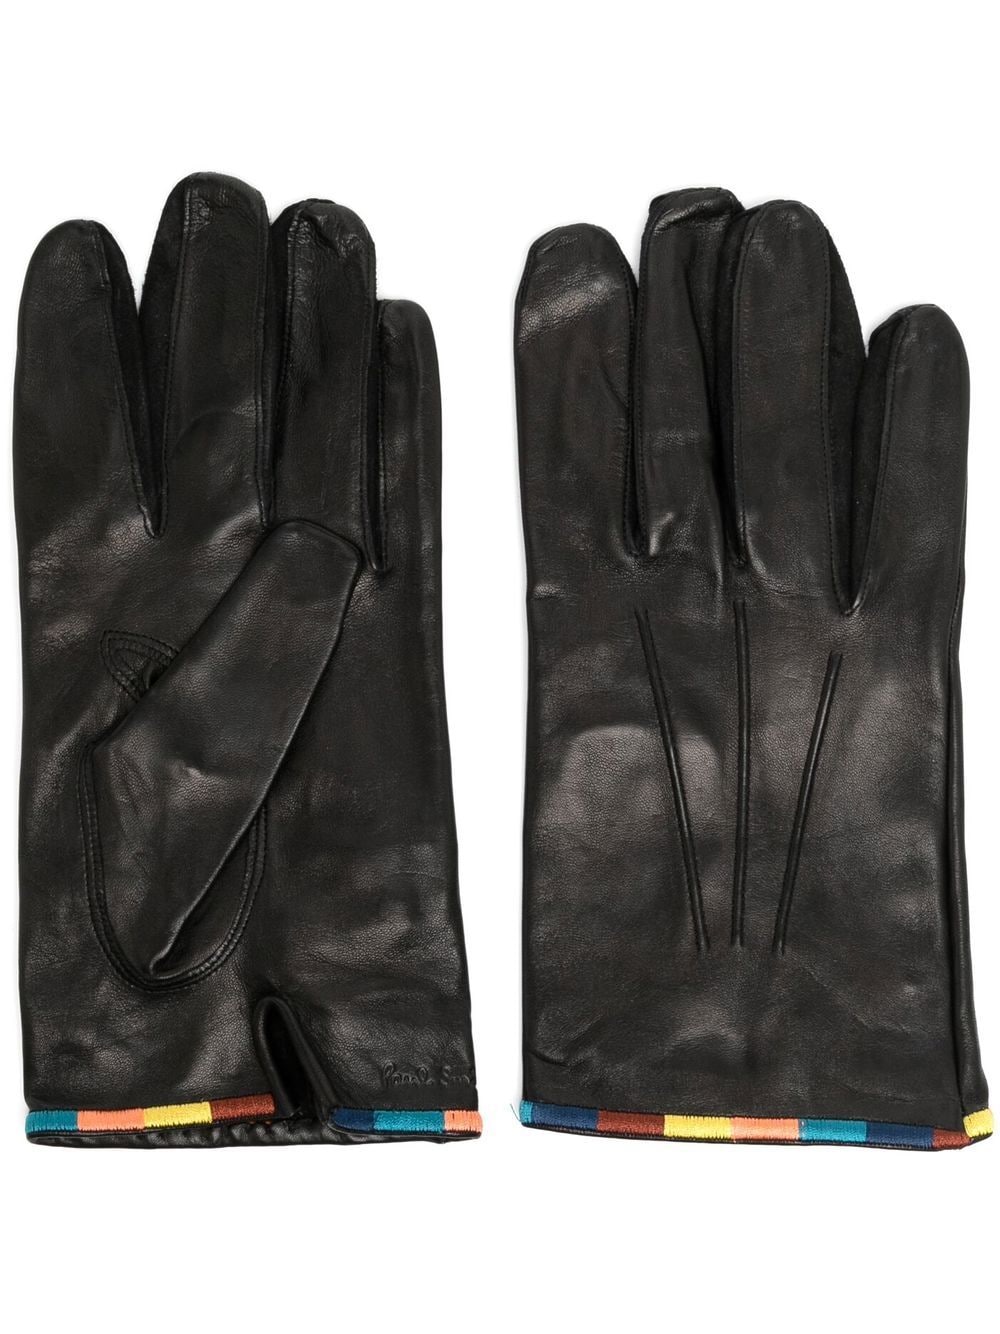 Paul Smith Gloves Black